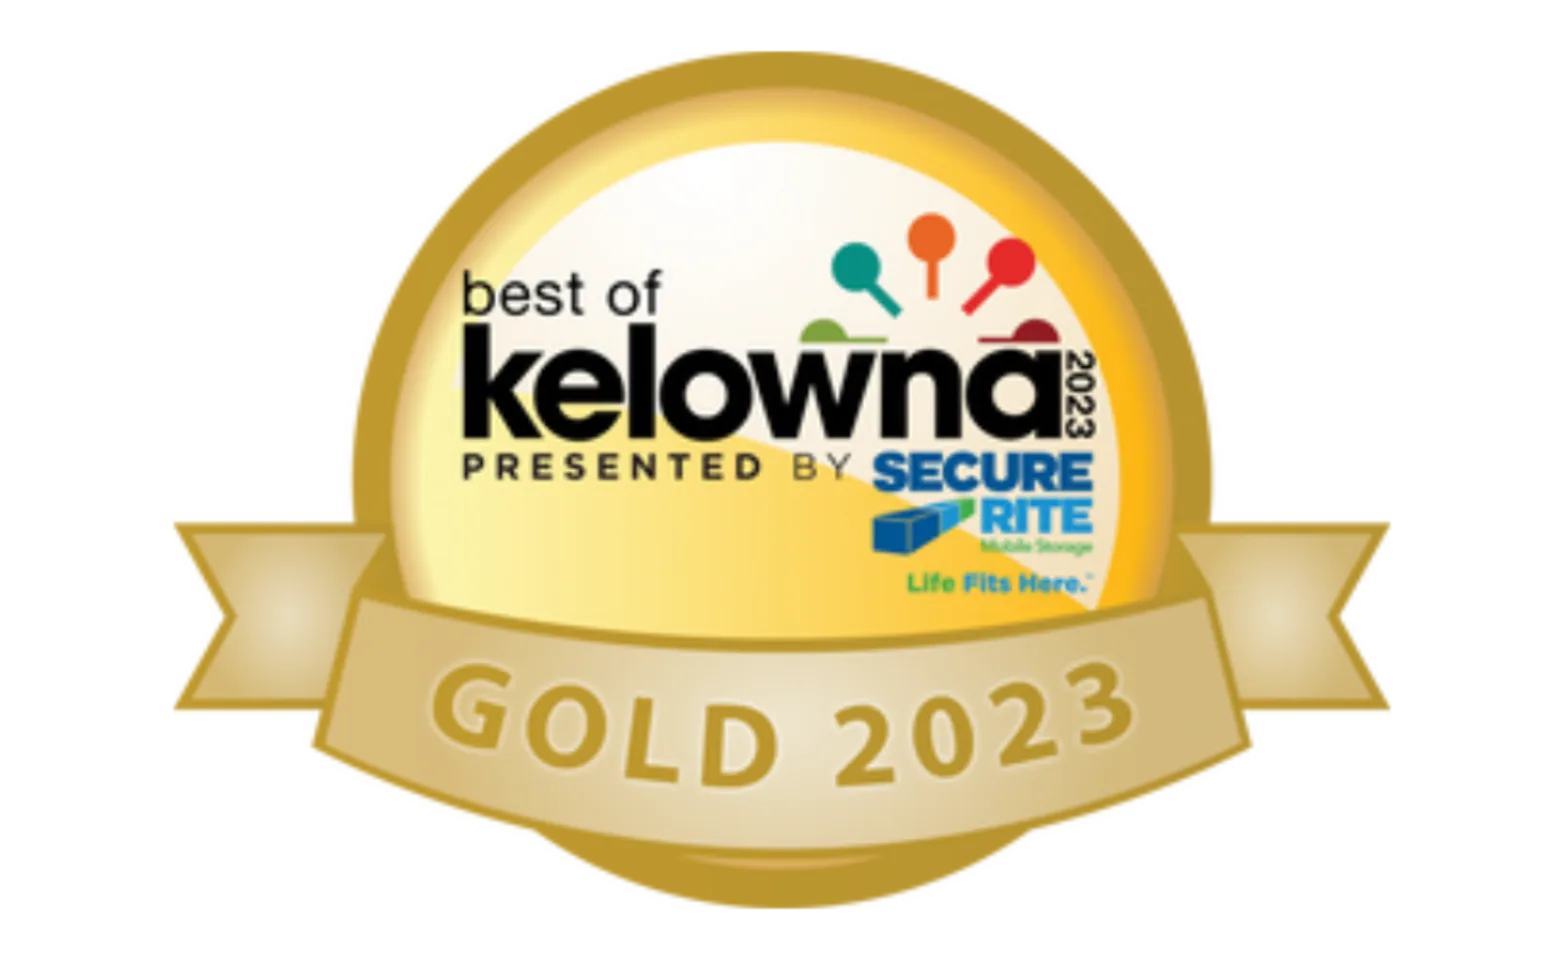 Best of Kelowna award 2023 gold badge